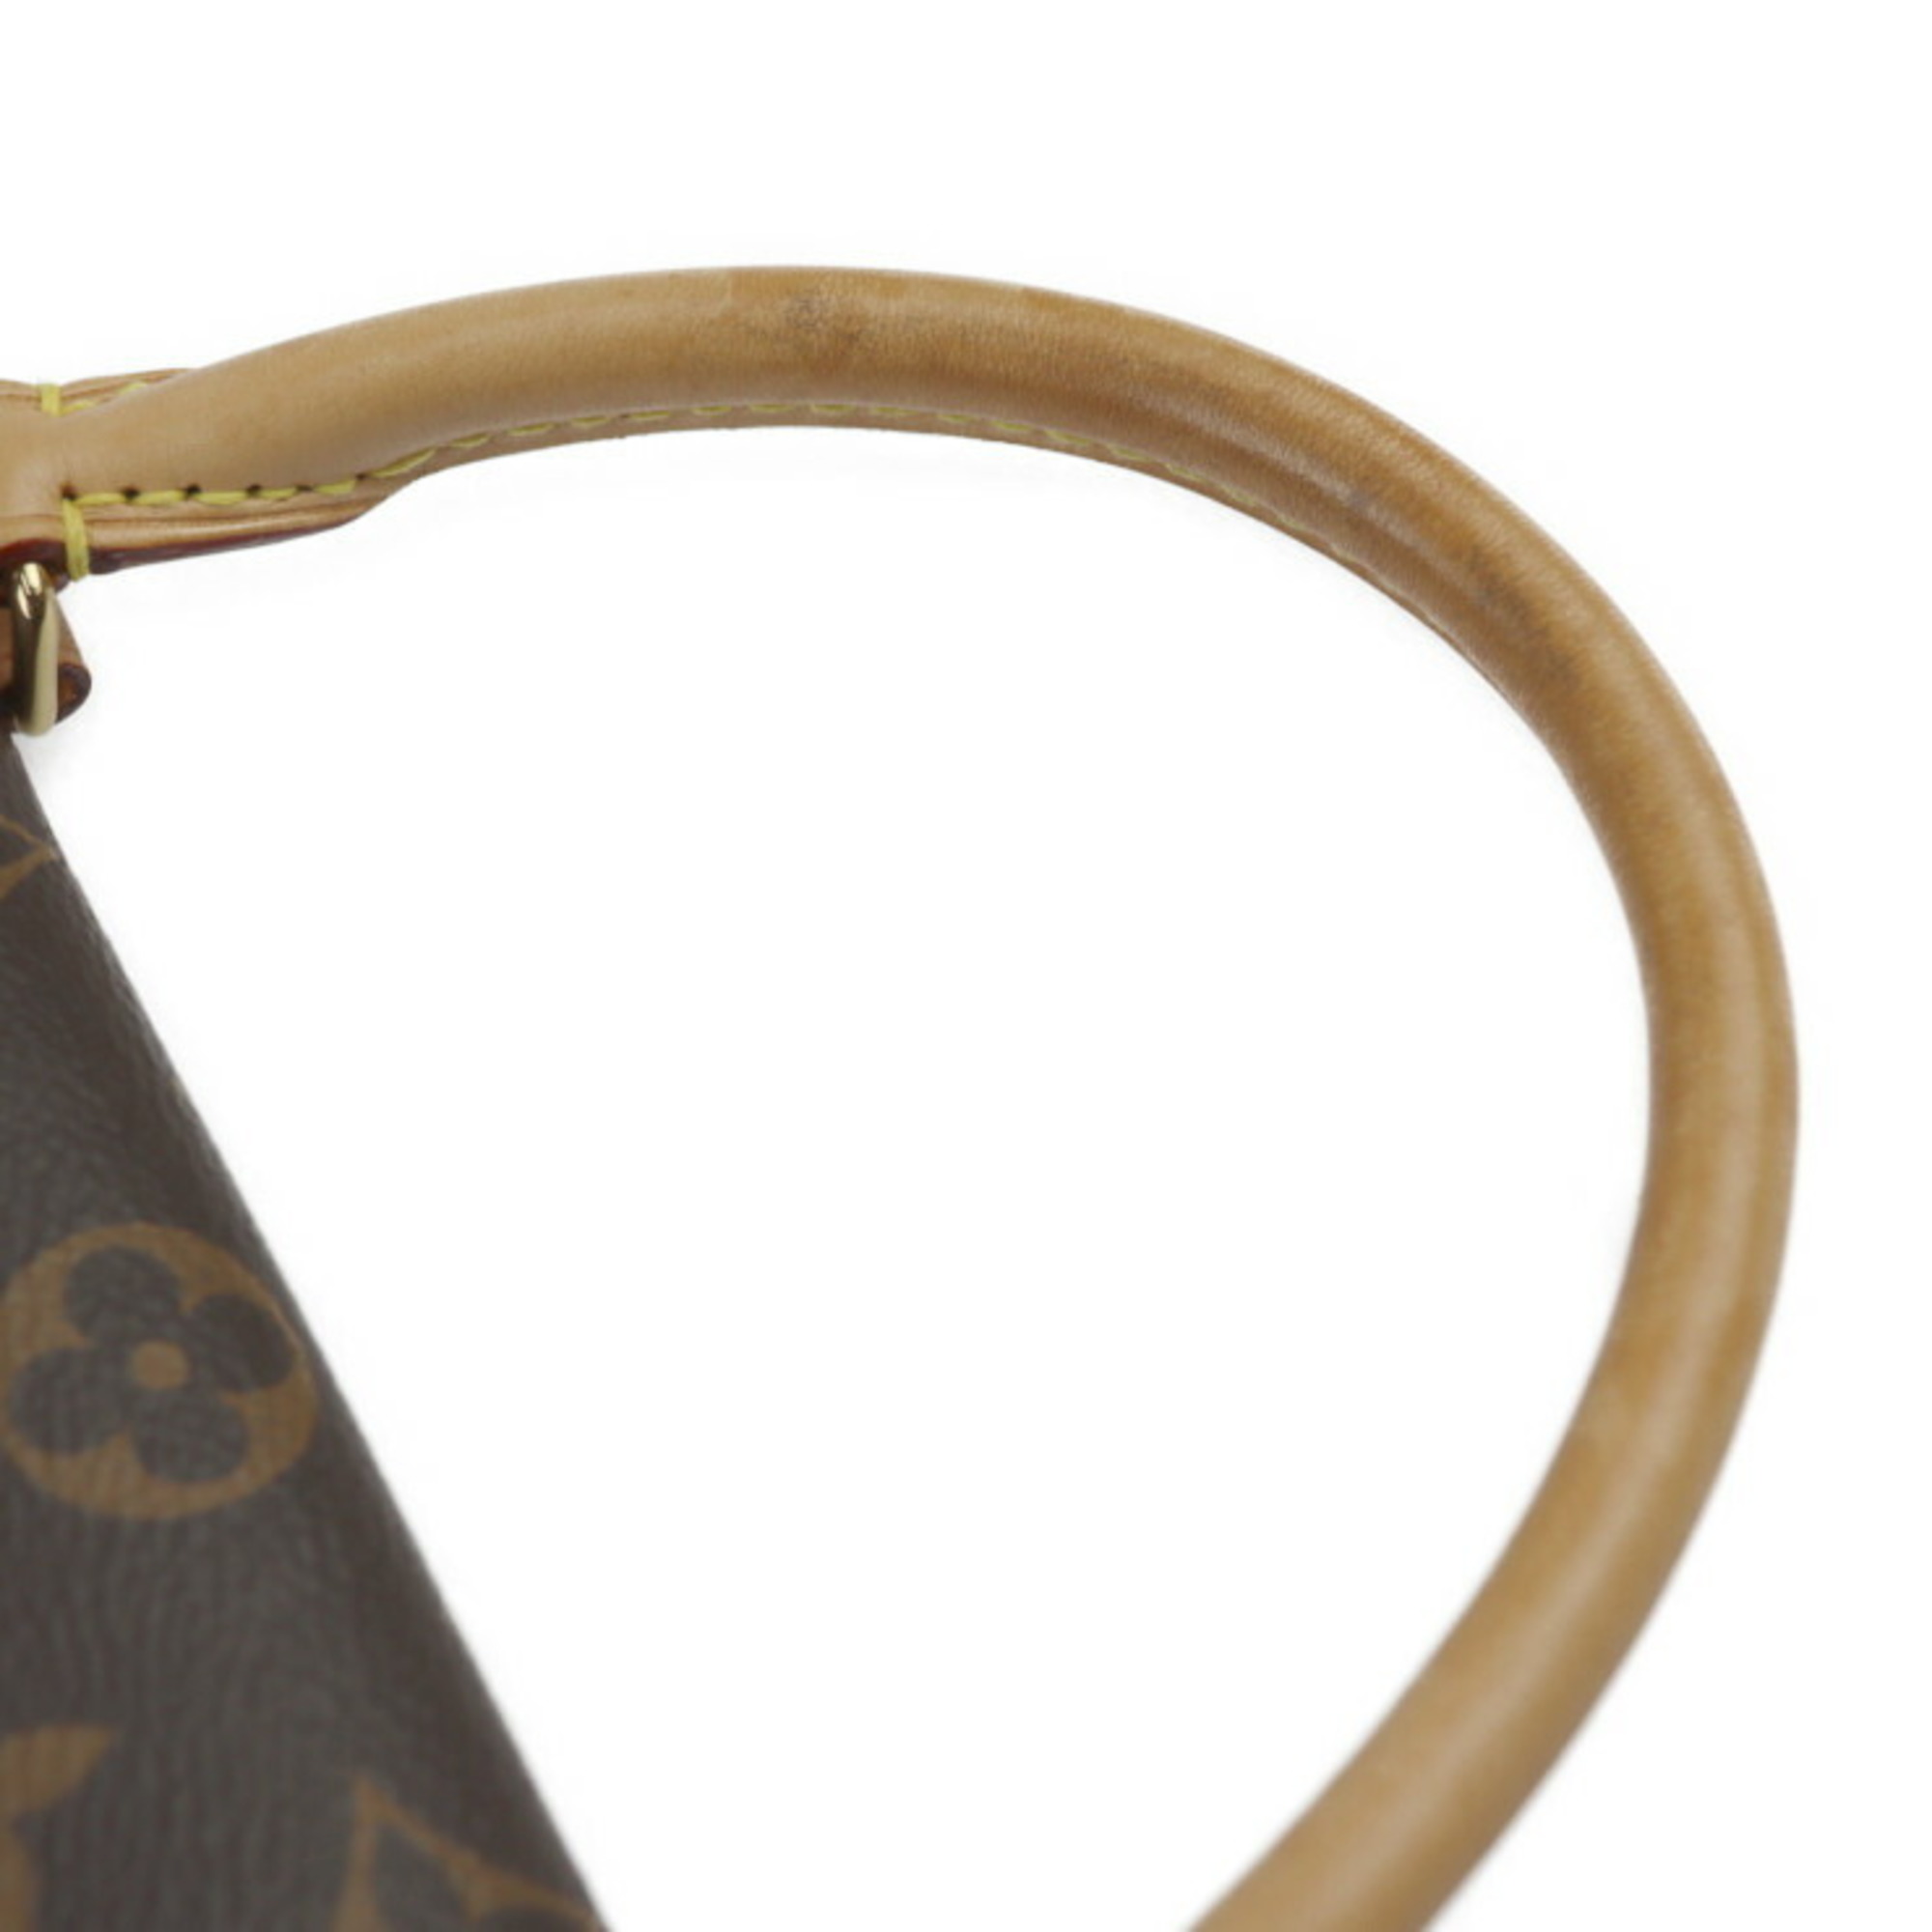 LOUIS VUITTON Louis Vuitton Marignan Handbag M44259 Monogram Canvas Leather Brown Black Gold Hardware 2WAY Shoulder Bag